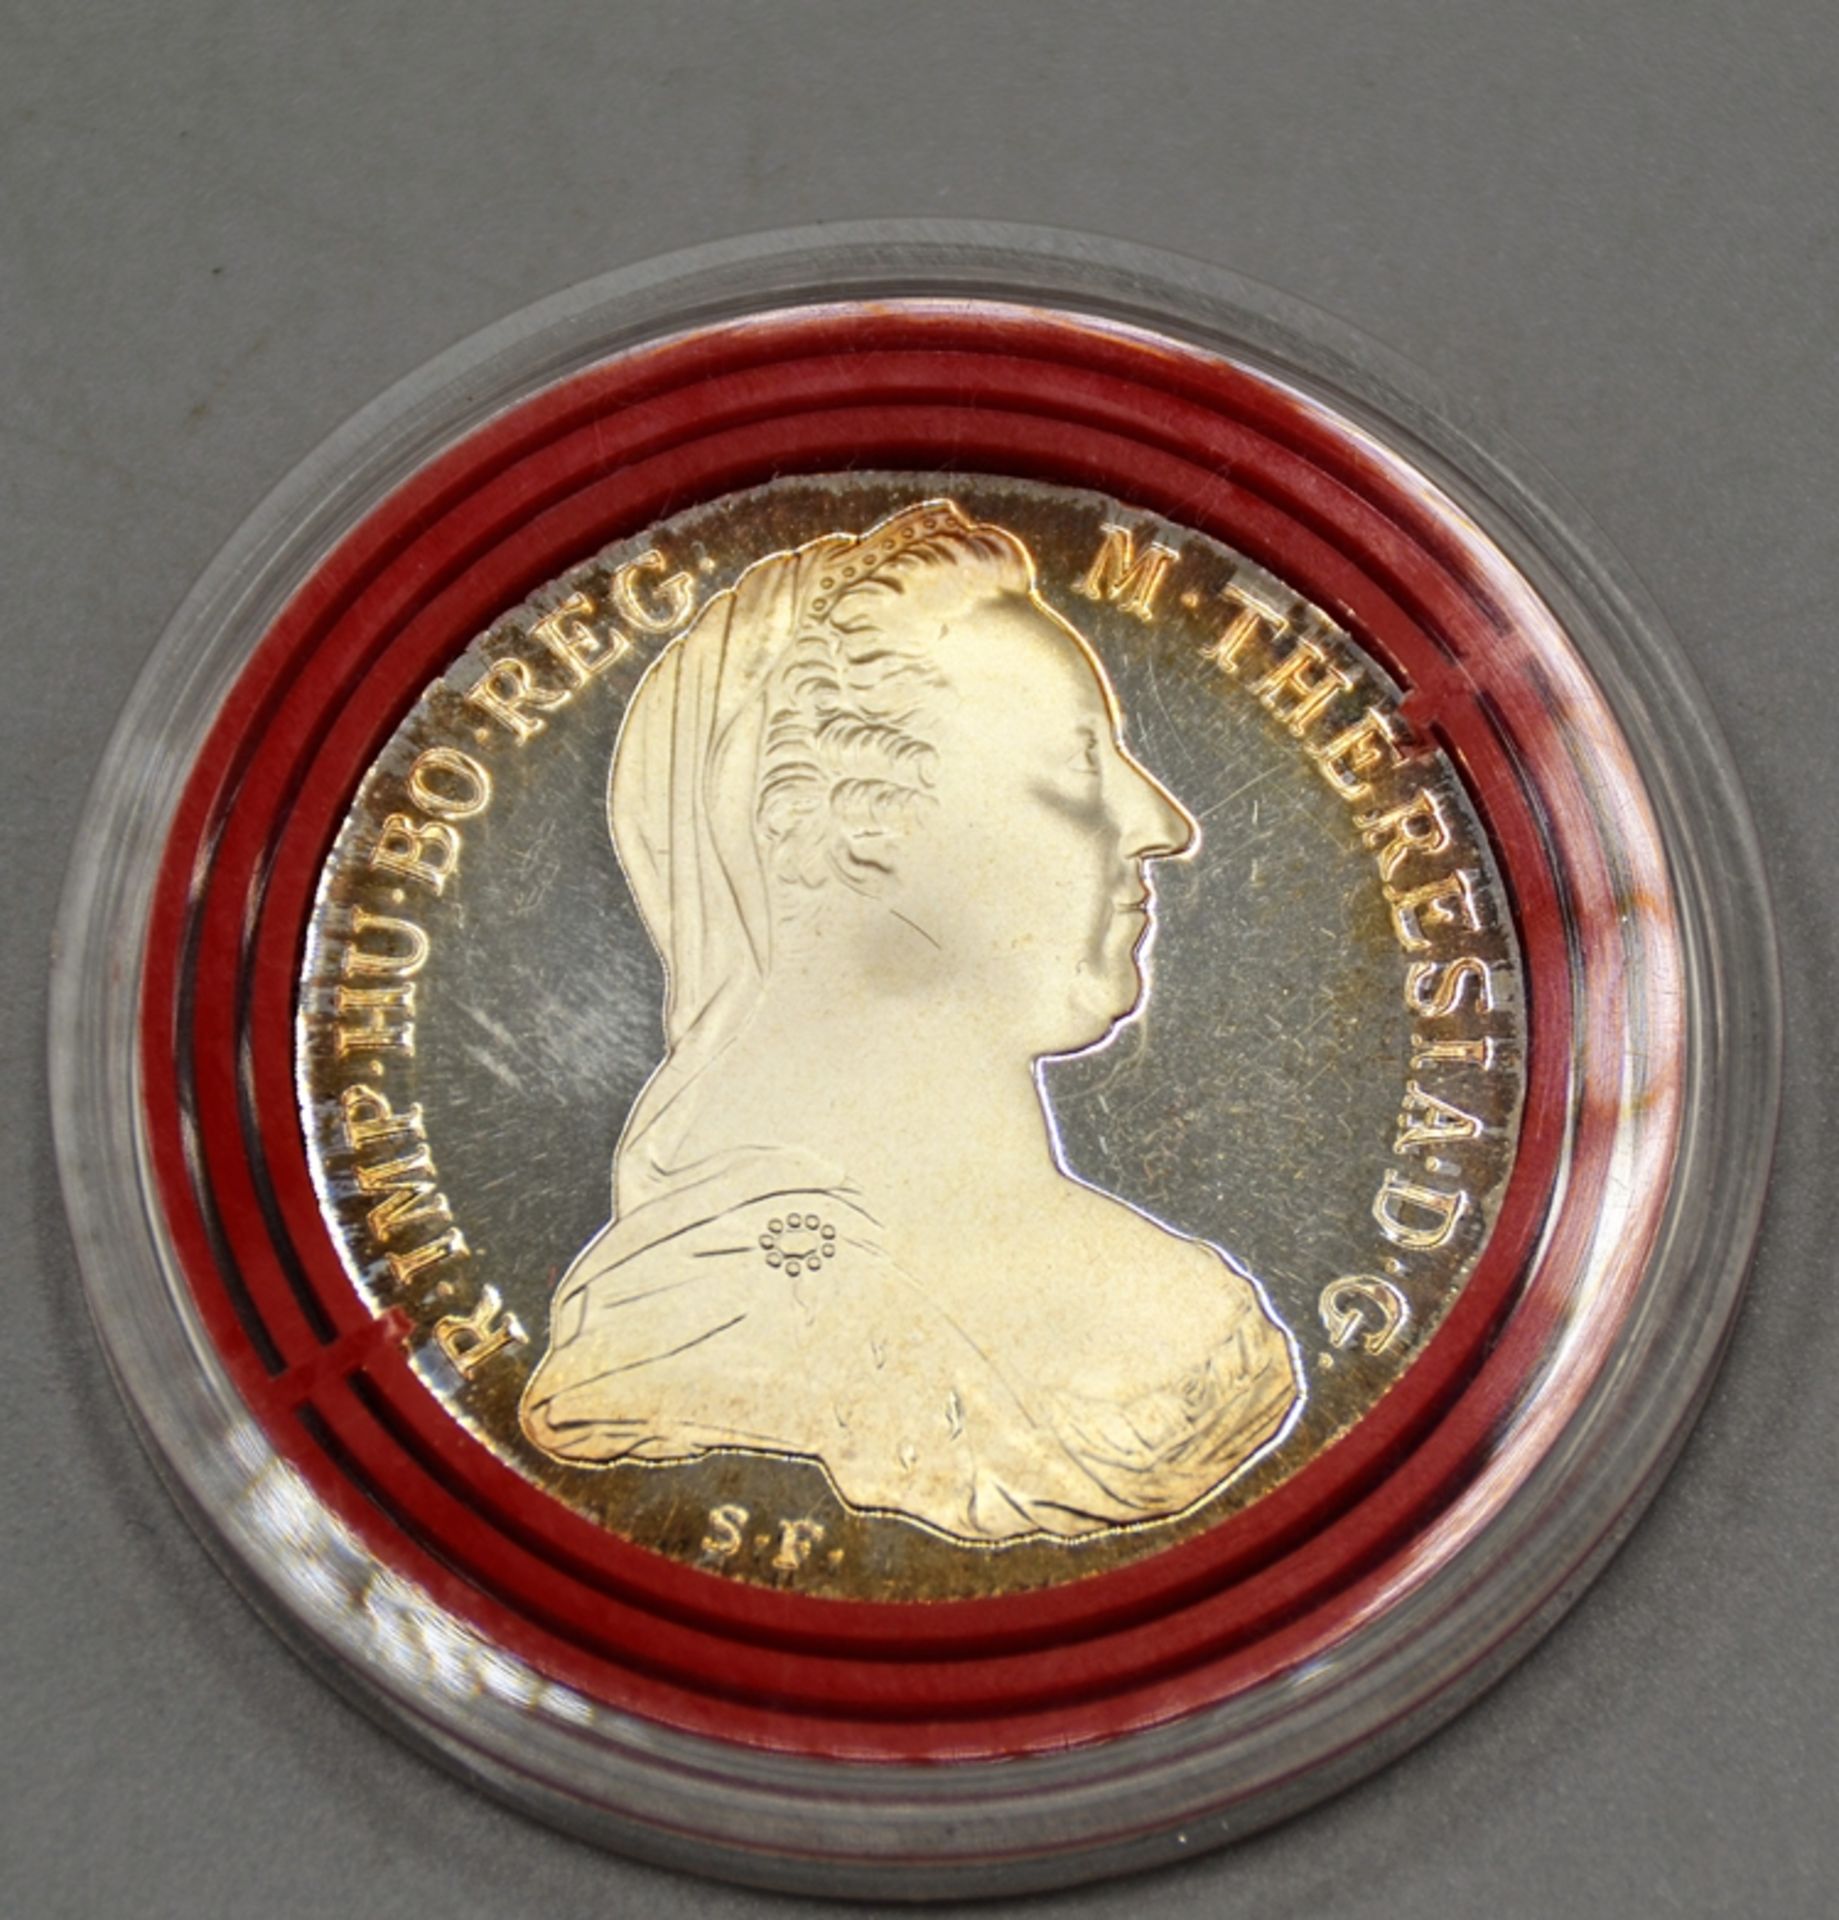 Maria Theresien Taler Silber Polierte Platte, Neuprägung, mit Zertifikat